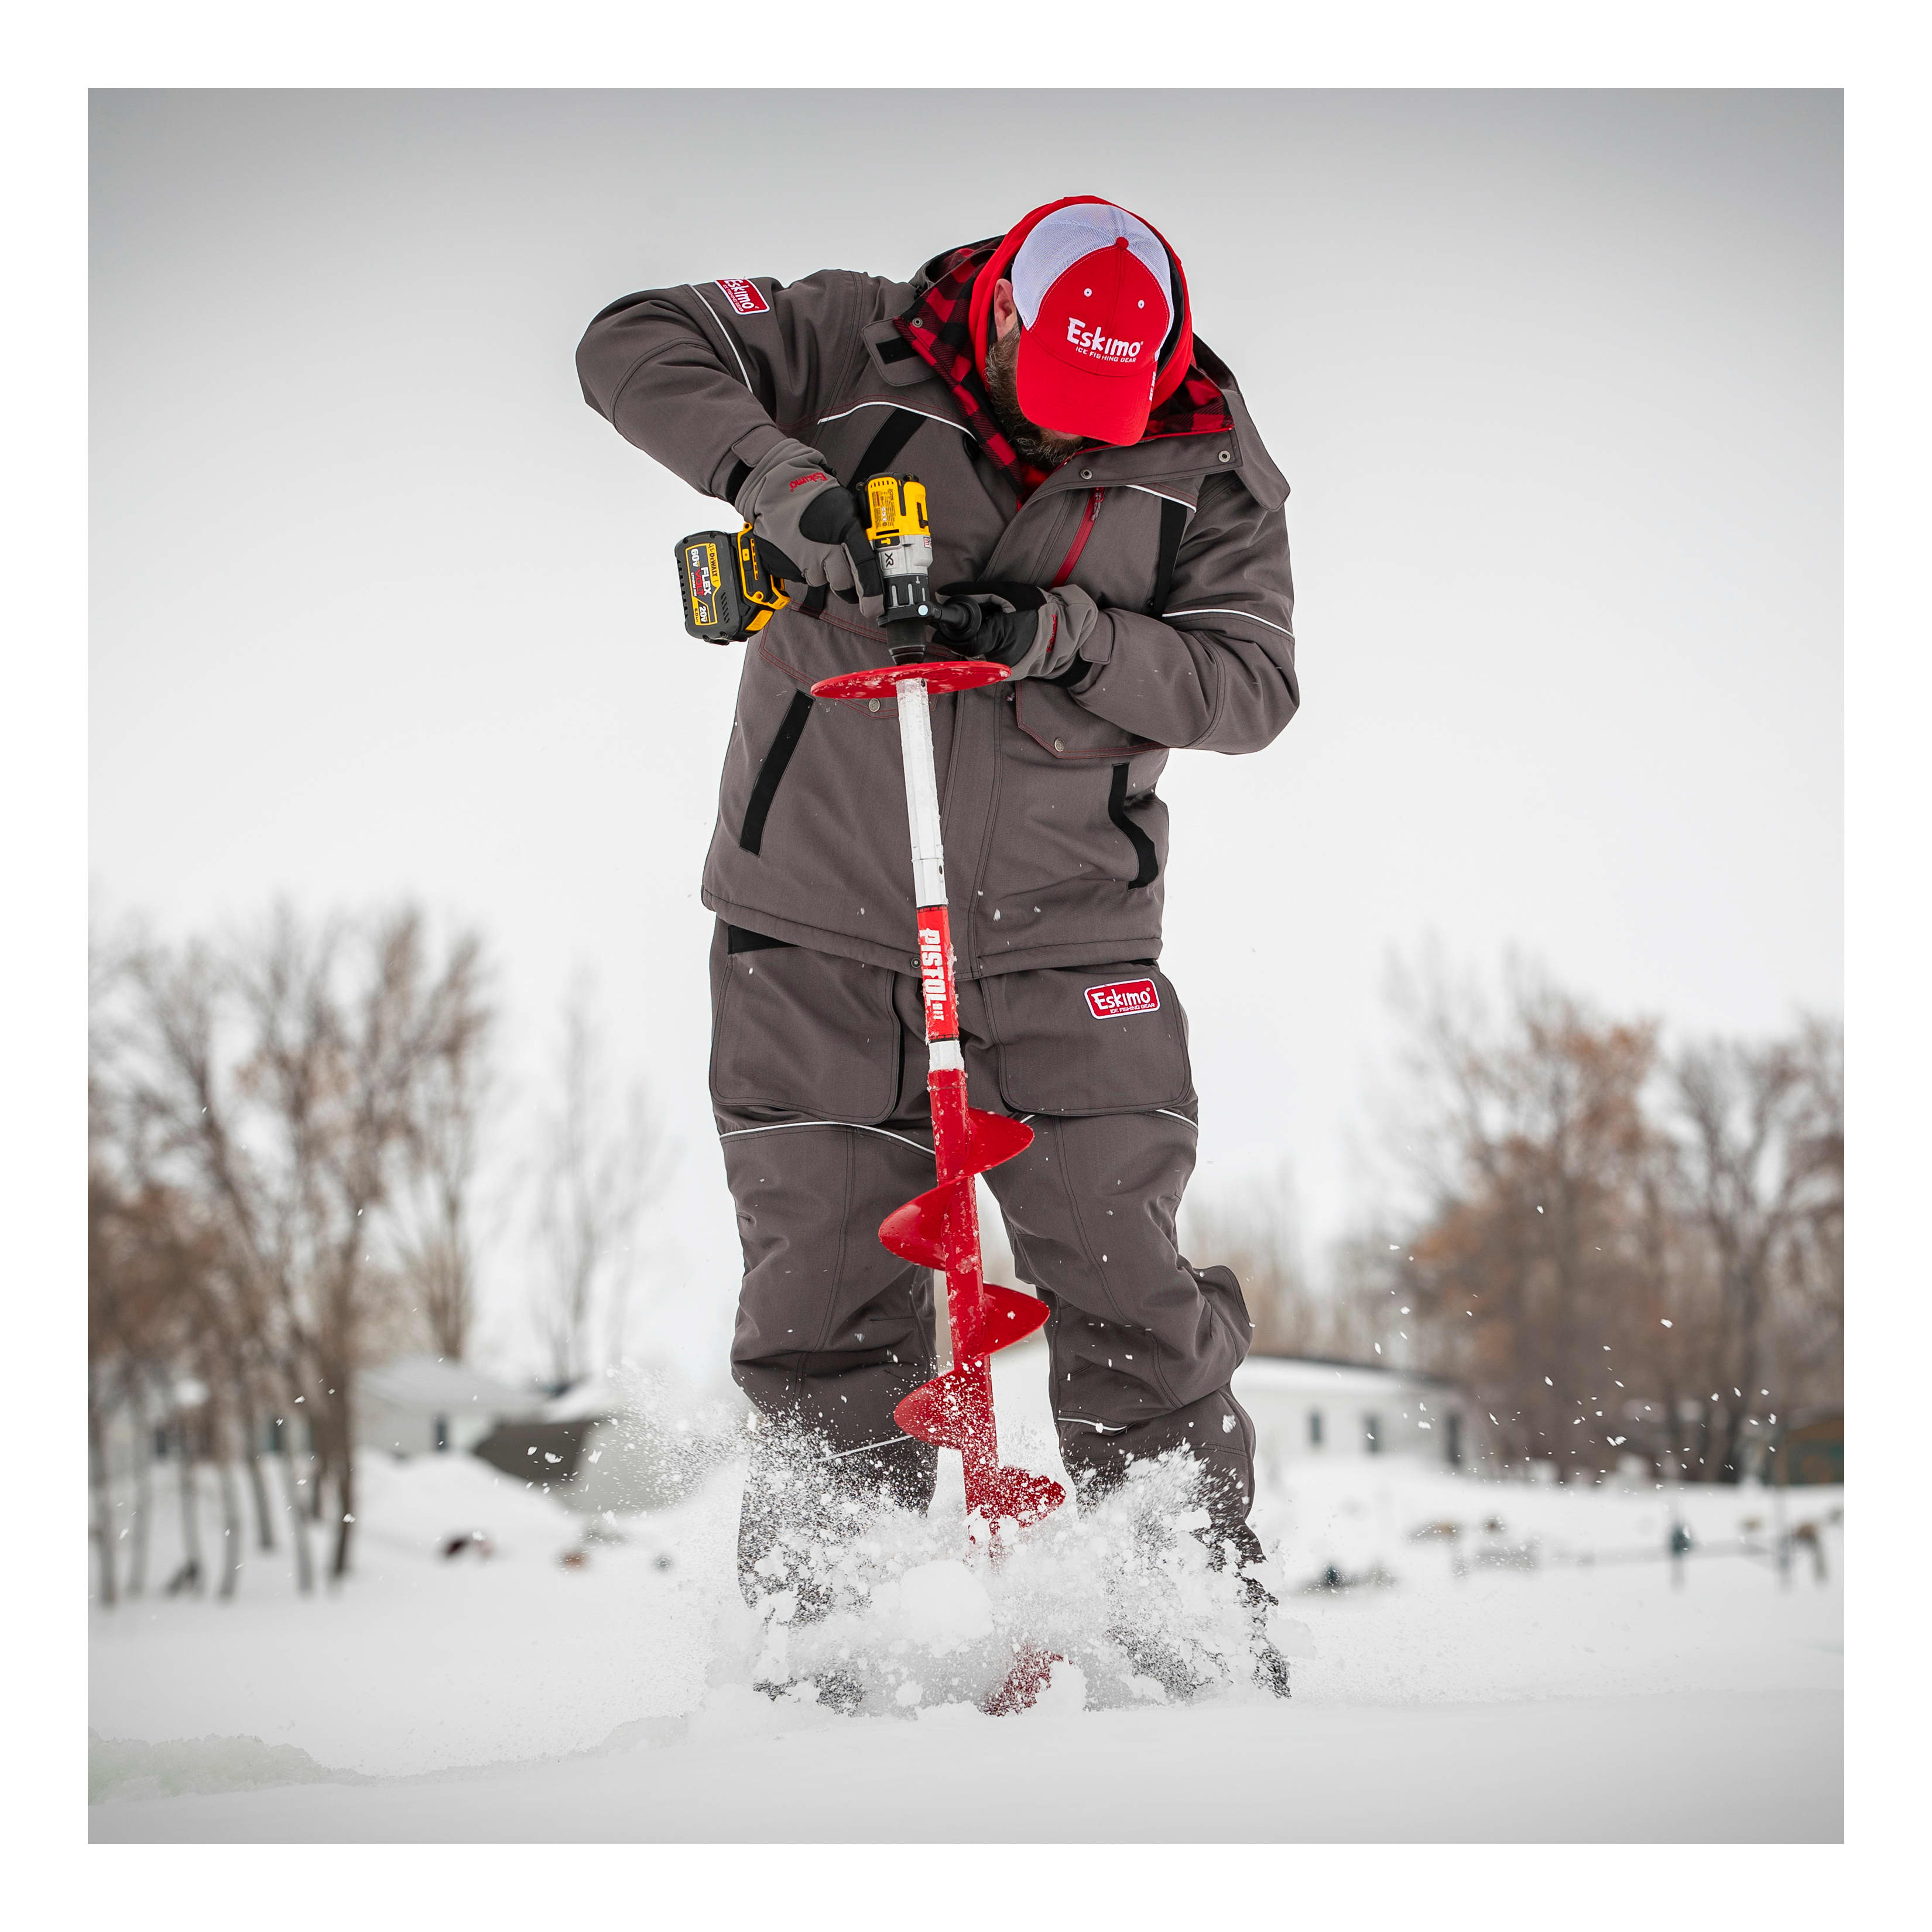 Eskimo Pistol Bit Drill Adaptor Ice Auger - In the Field